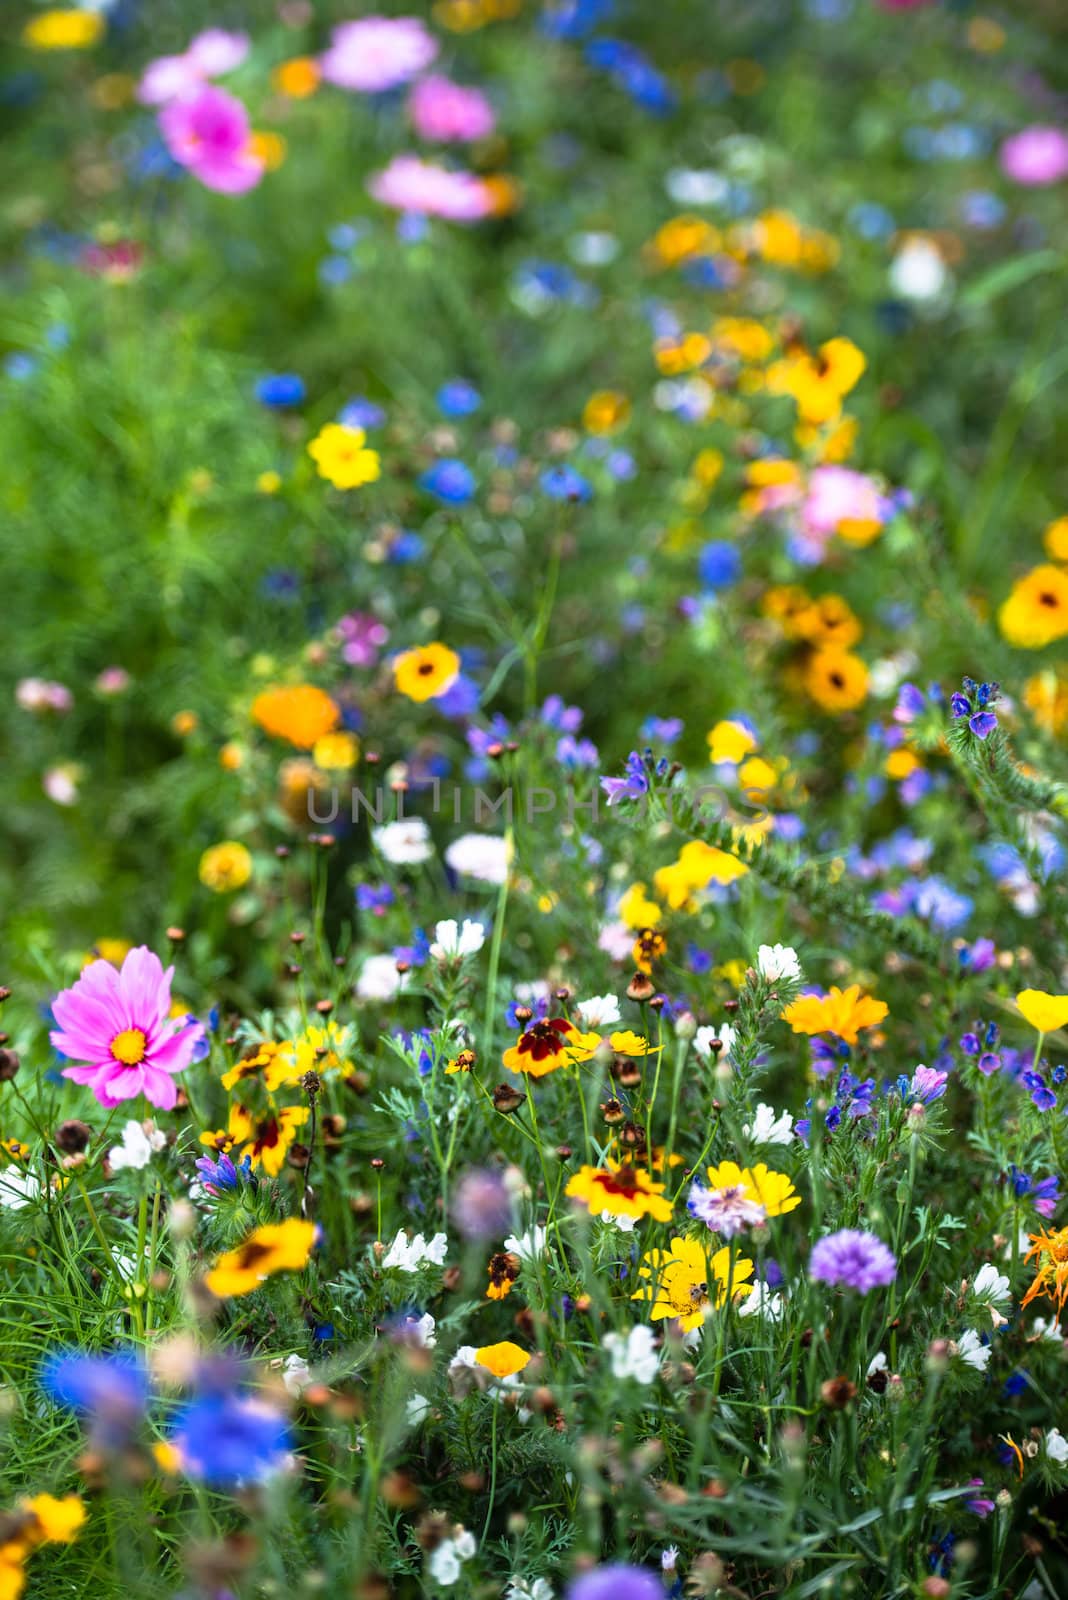 Different colourful wild flowers in garden in bright sunlight